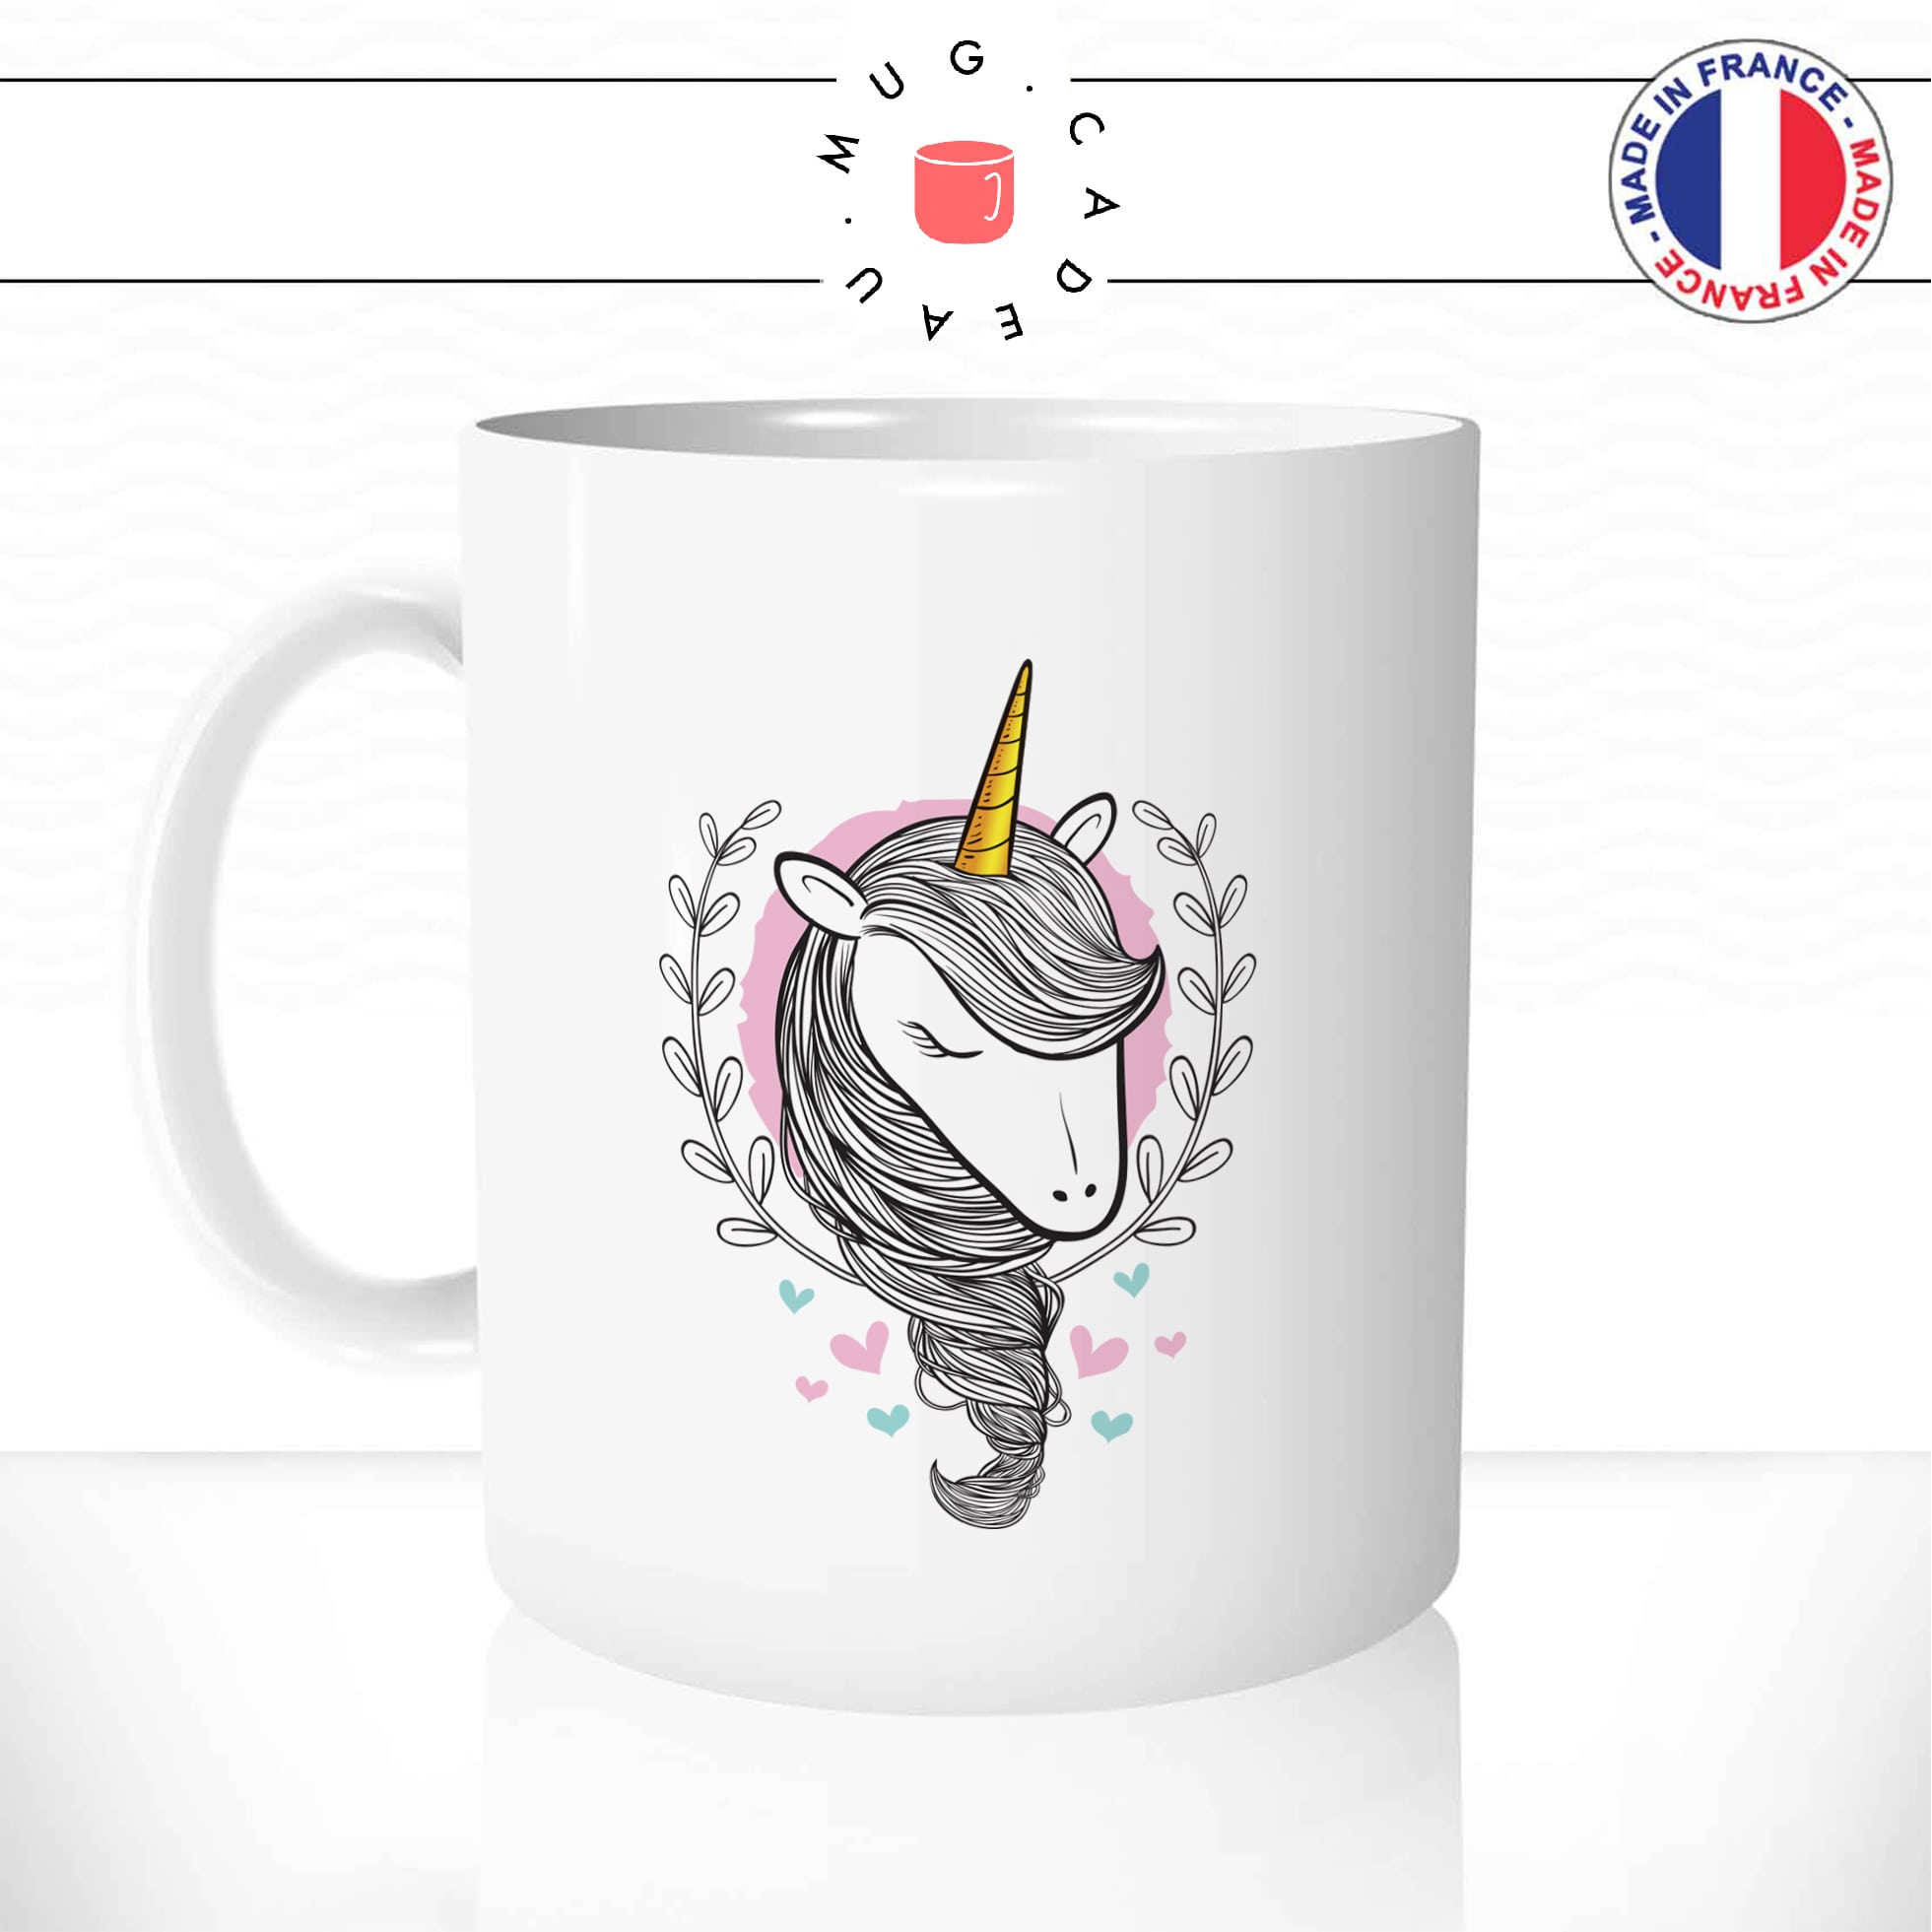 mug-tasse-animal-licorne-fleurs-dessin-cool-fun-mugs-tasses-café-thé-idée-cadeau-original-personnalisable